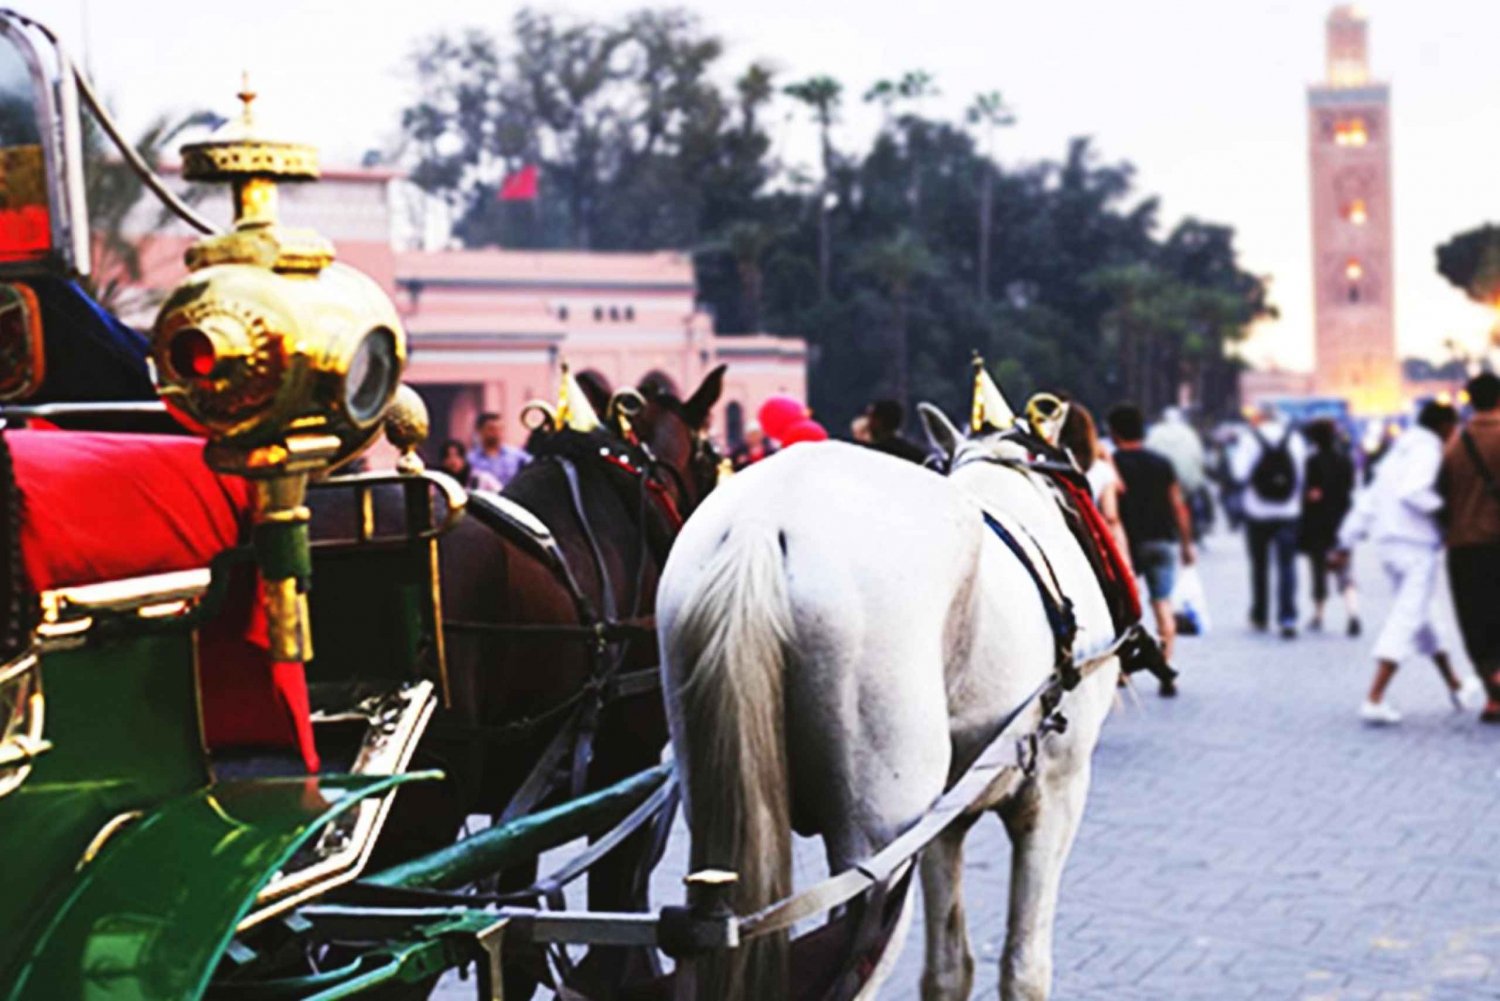 Marrakech: 2-Hour Horse-Drawn Carriage Tour